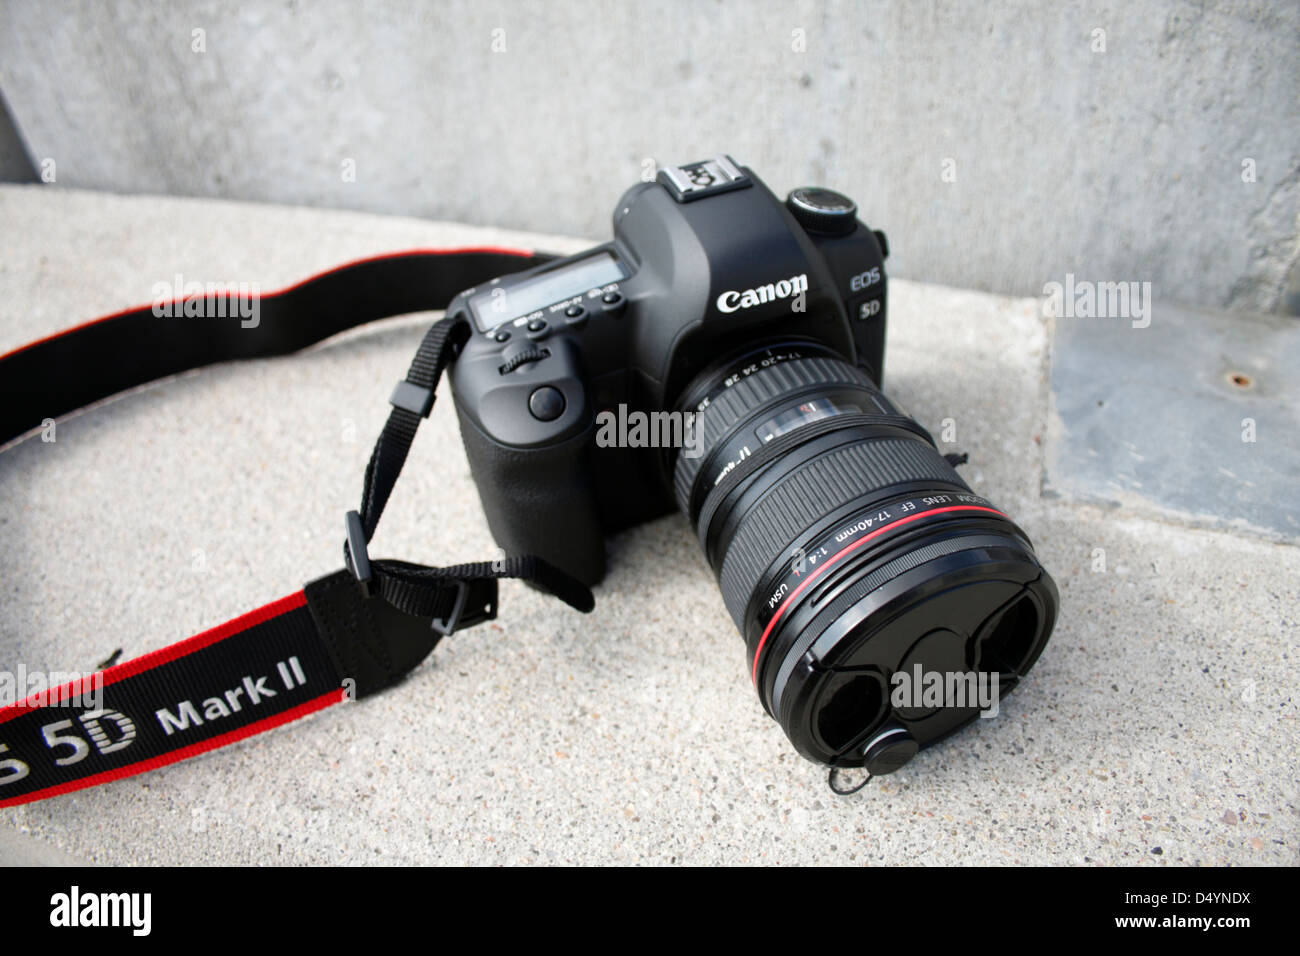 Canon 5D Mark II mit EF 17-40mm f / 4L USM Objektiv Stockfotografie - Alamy